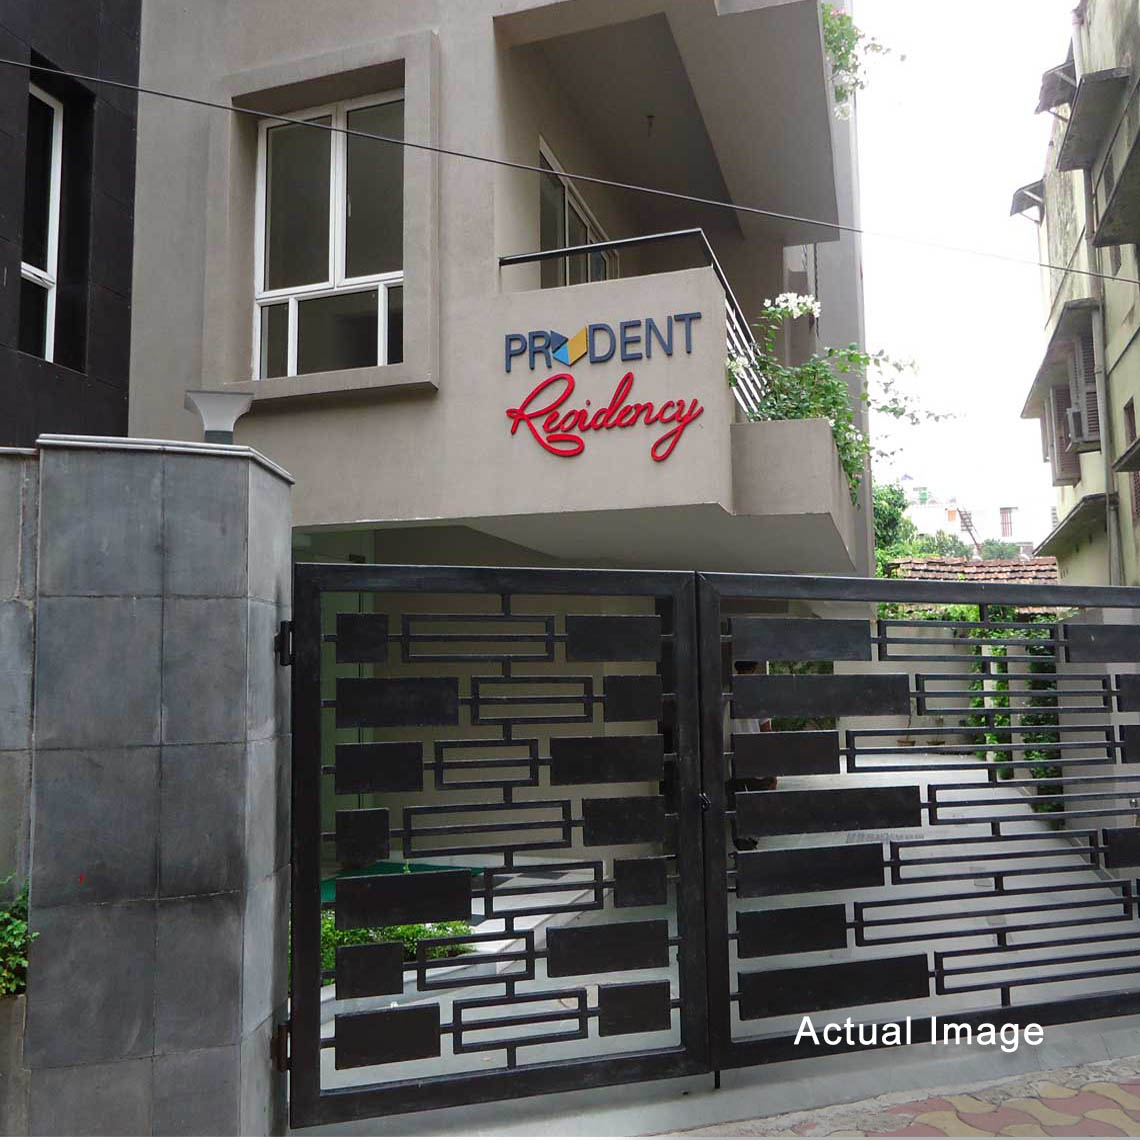 Prudent Residency New Alipore Kolkata - Actual Image